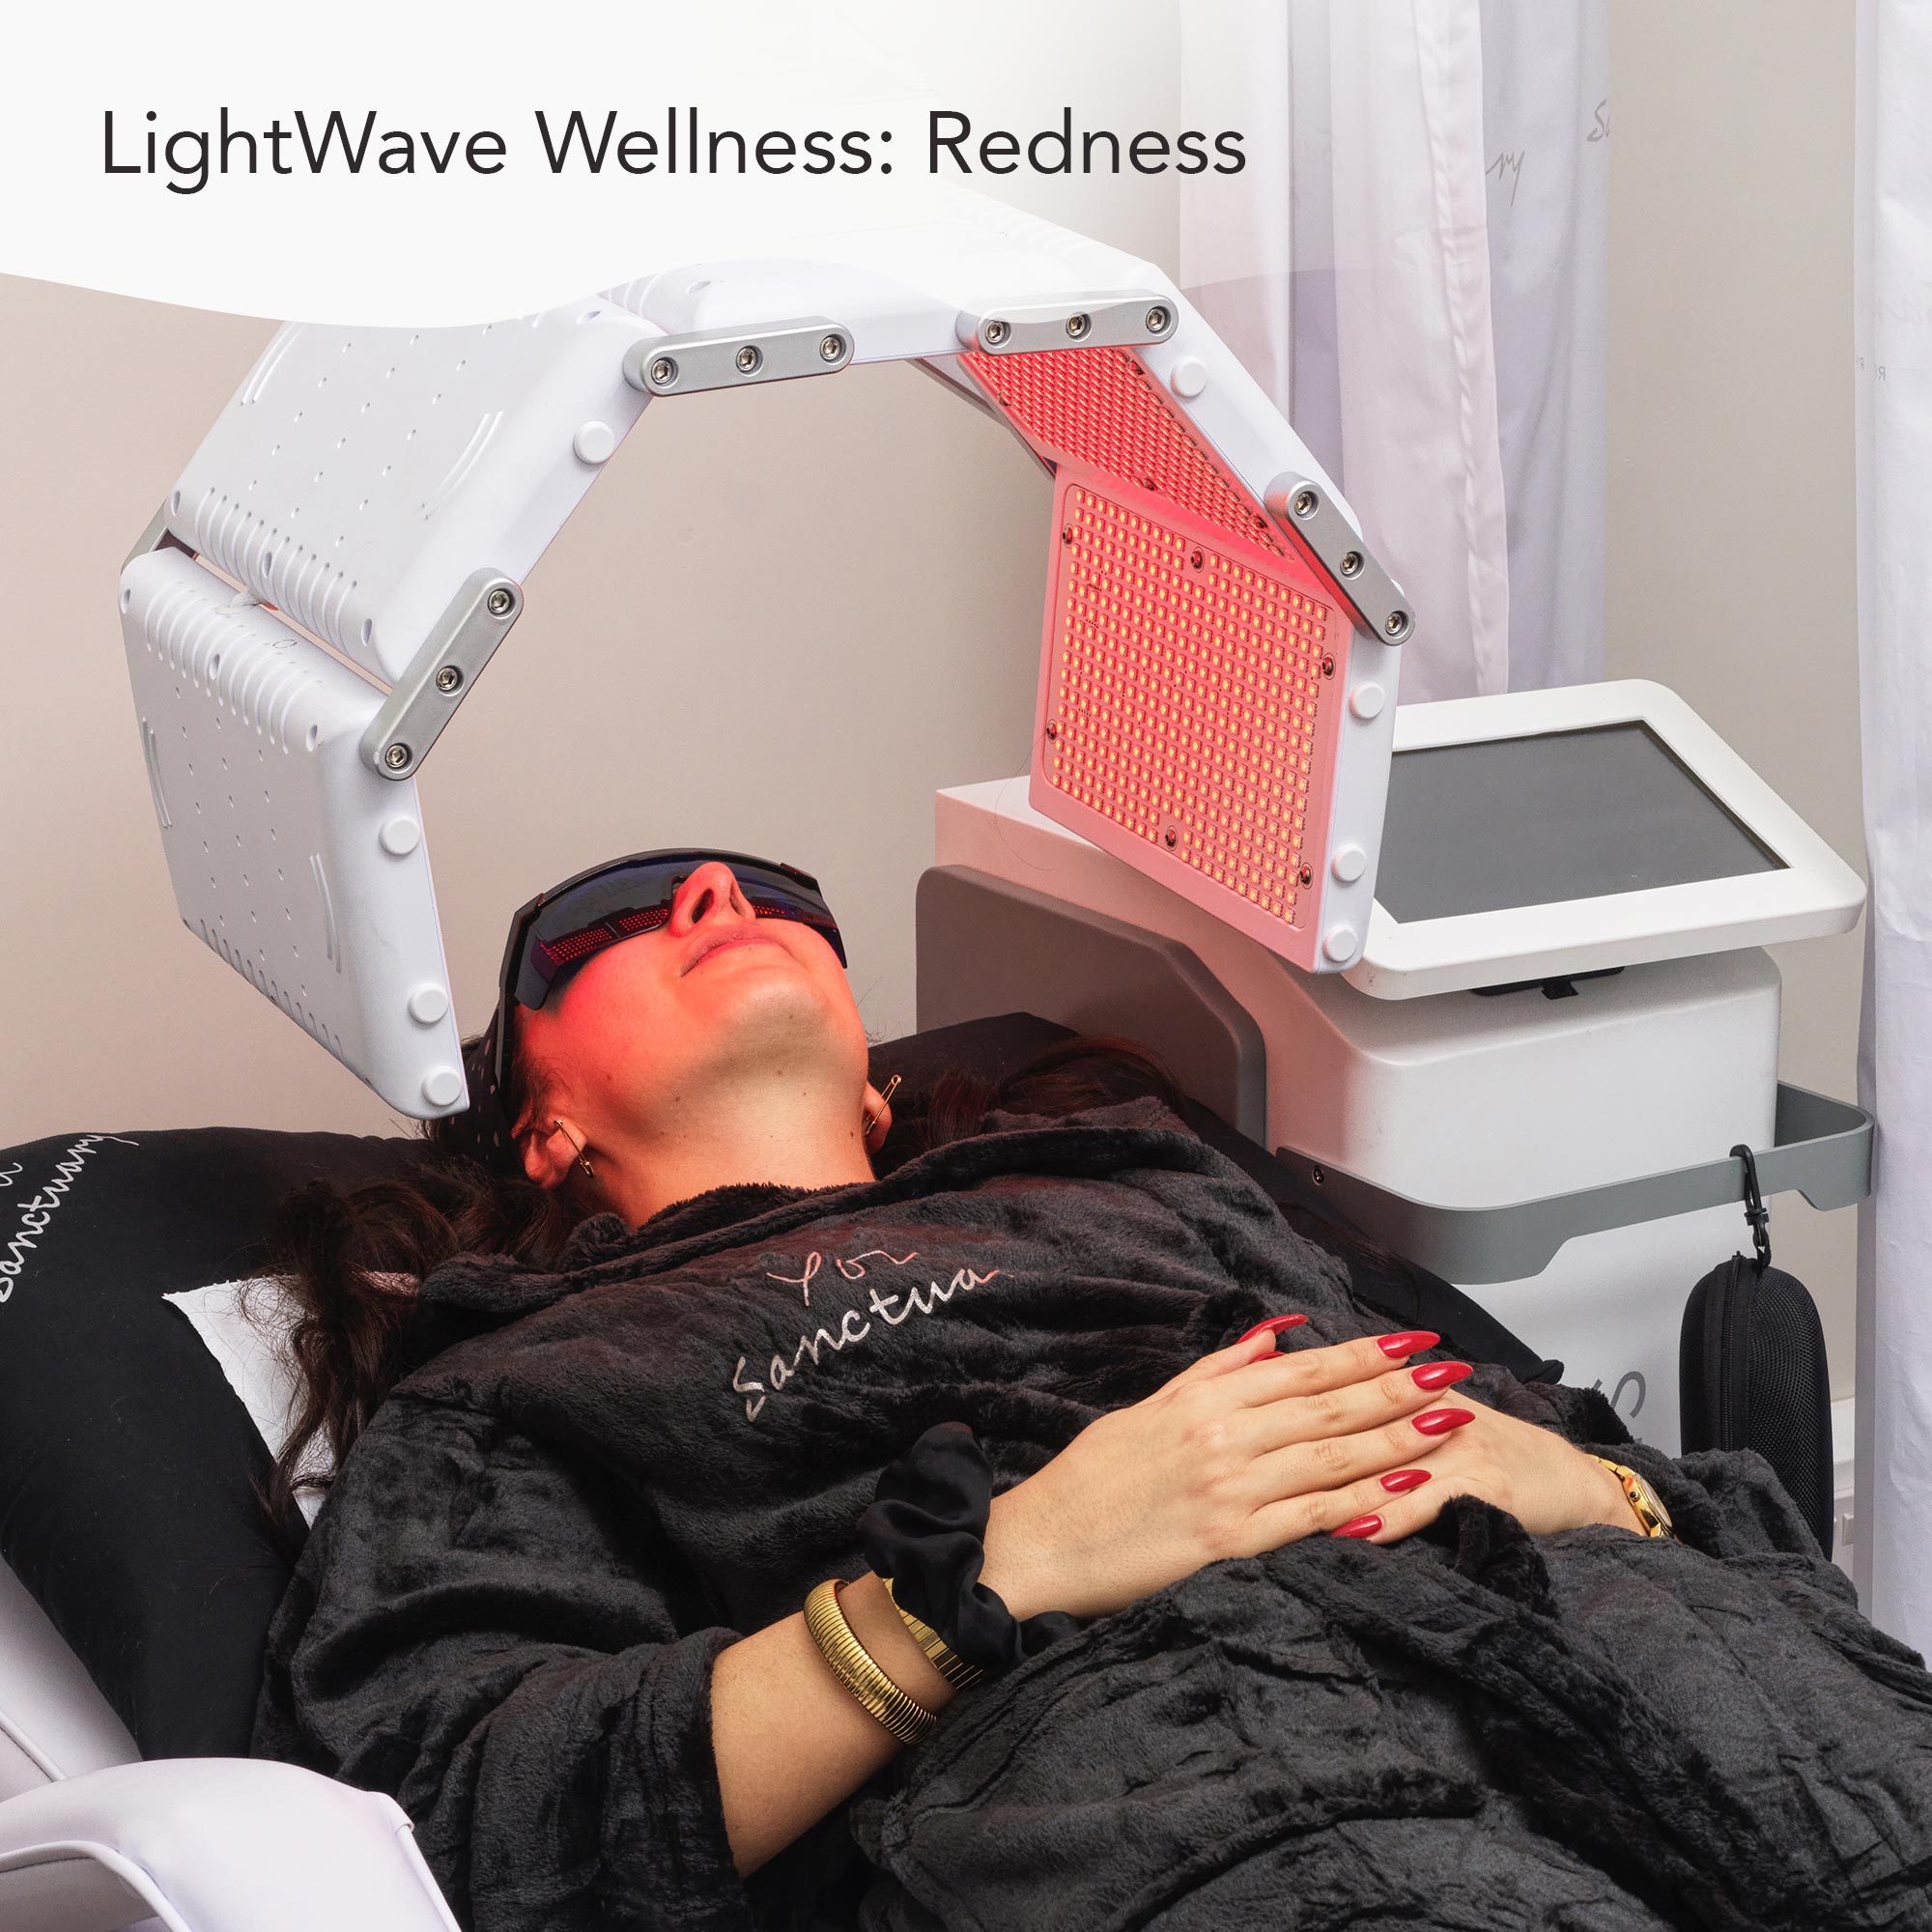 LightWave Wellness: Redness